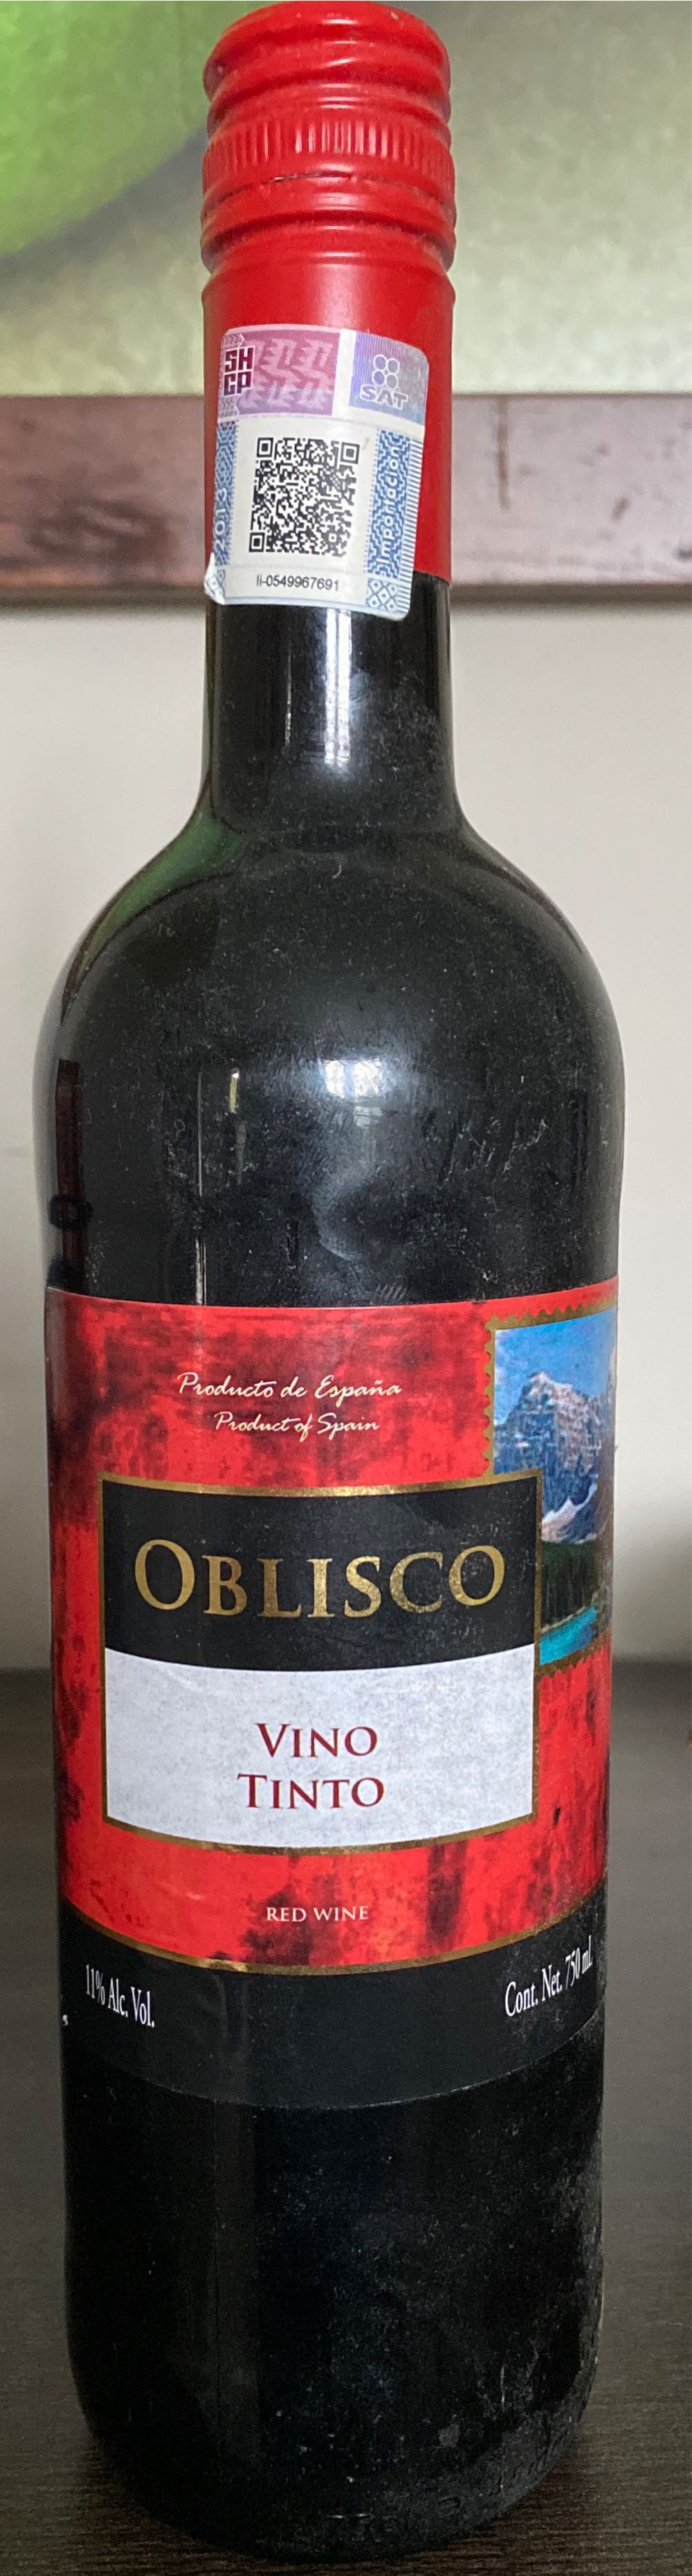 N.v. Oblisco Vino Tinto  wine collectible [Barcode 8420209023044] - Main Image 1